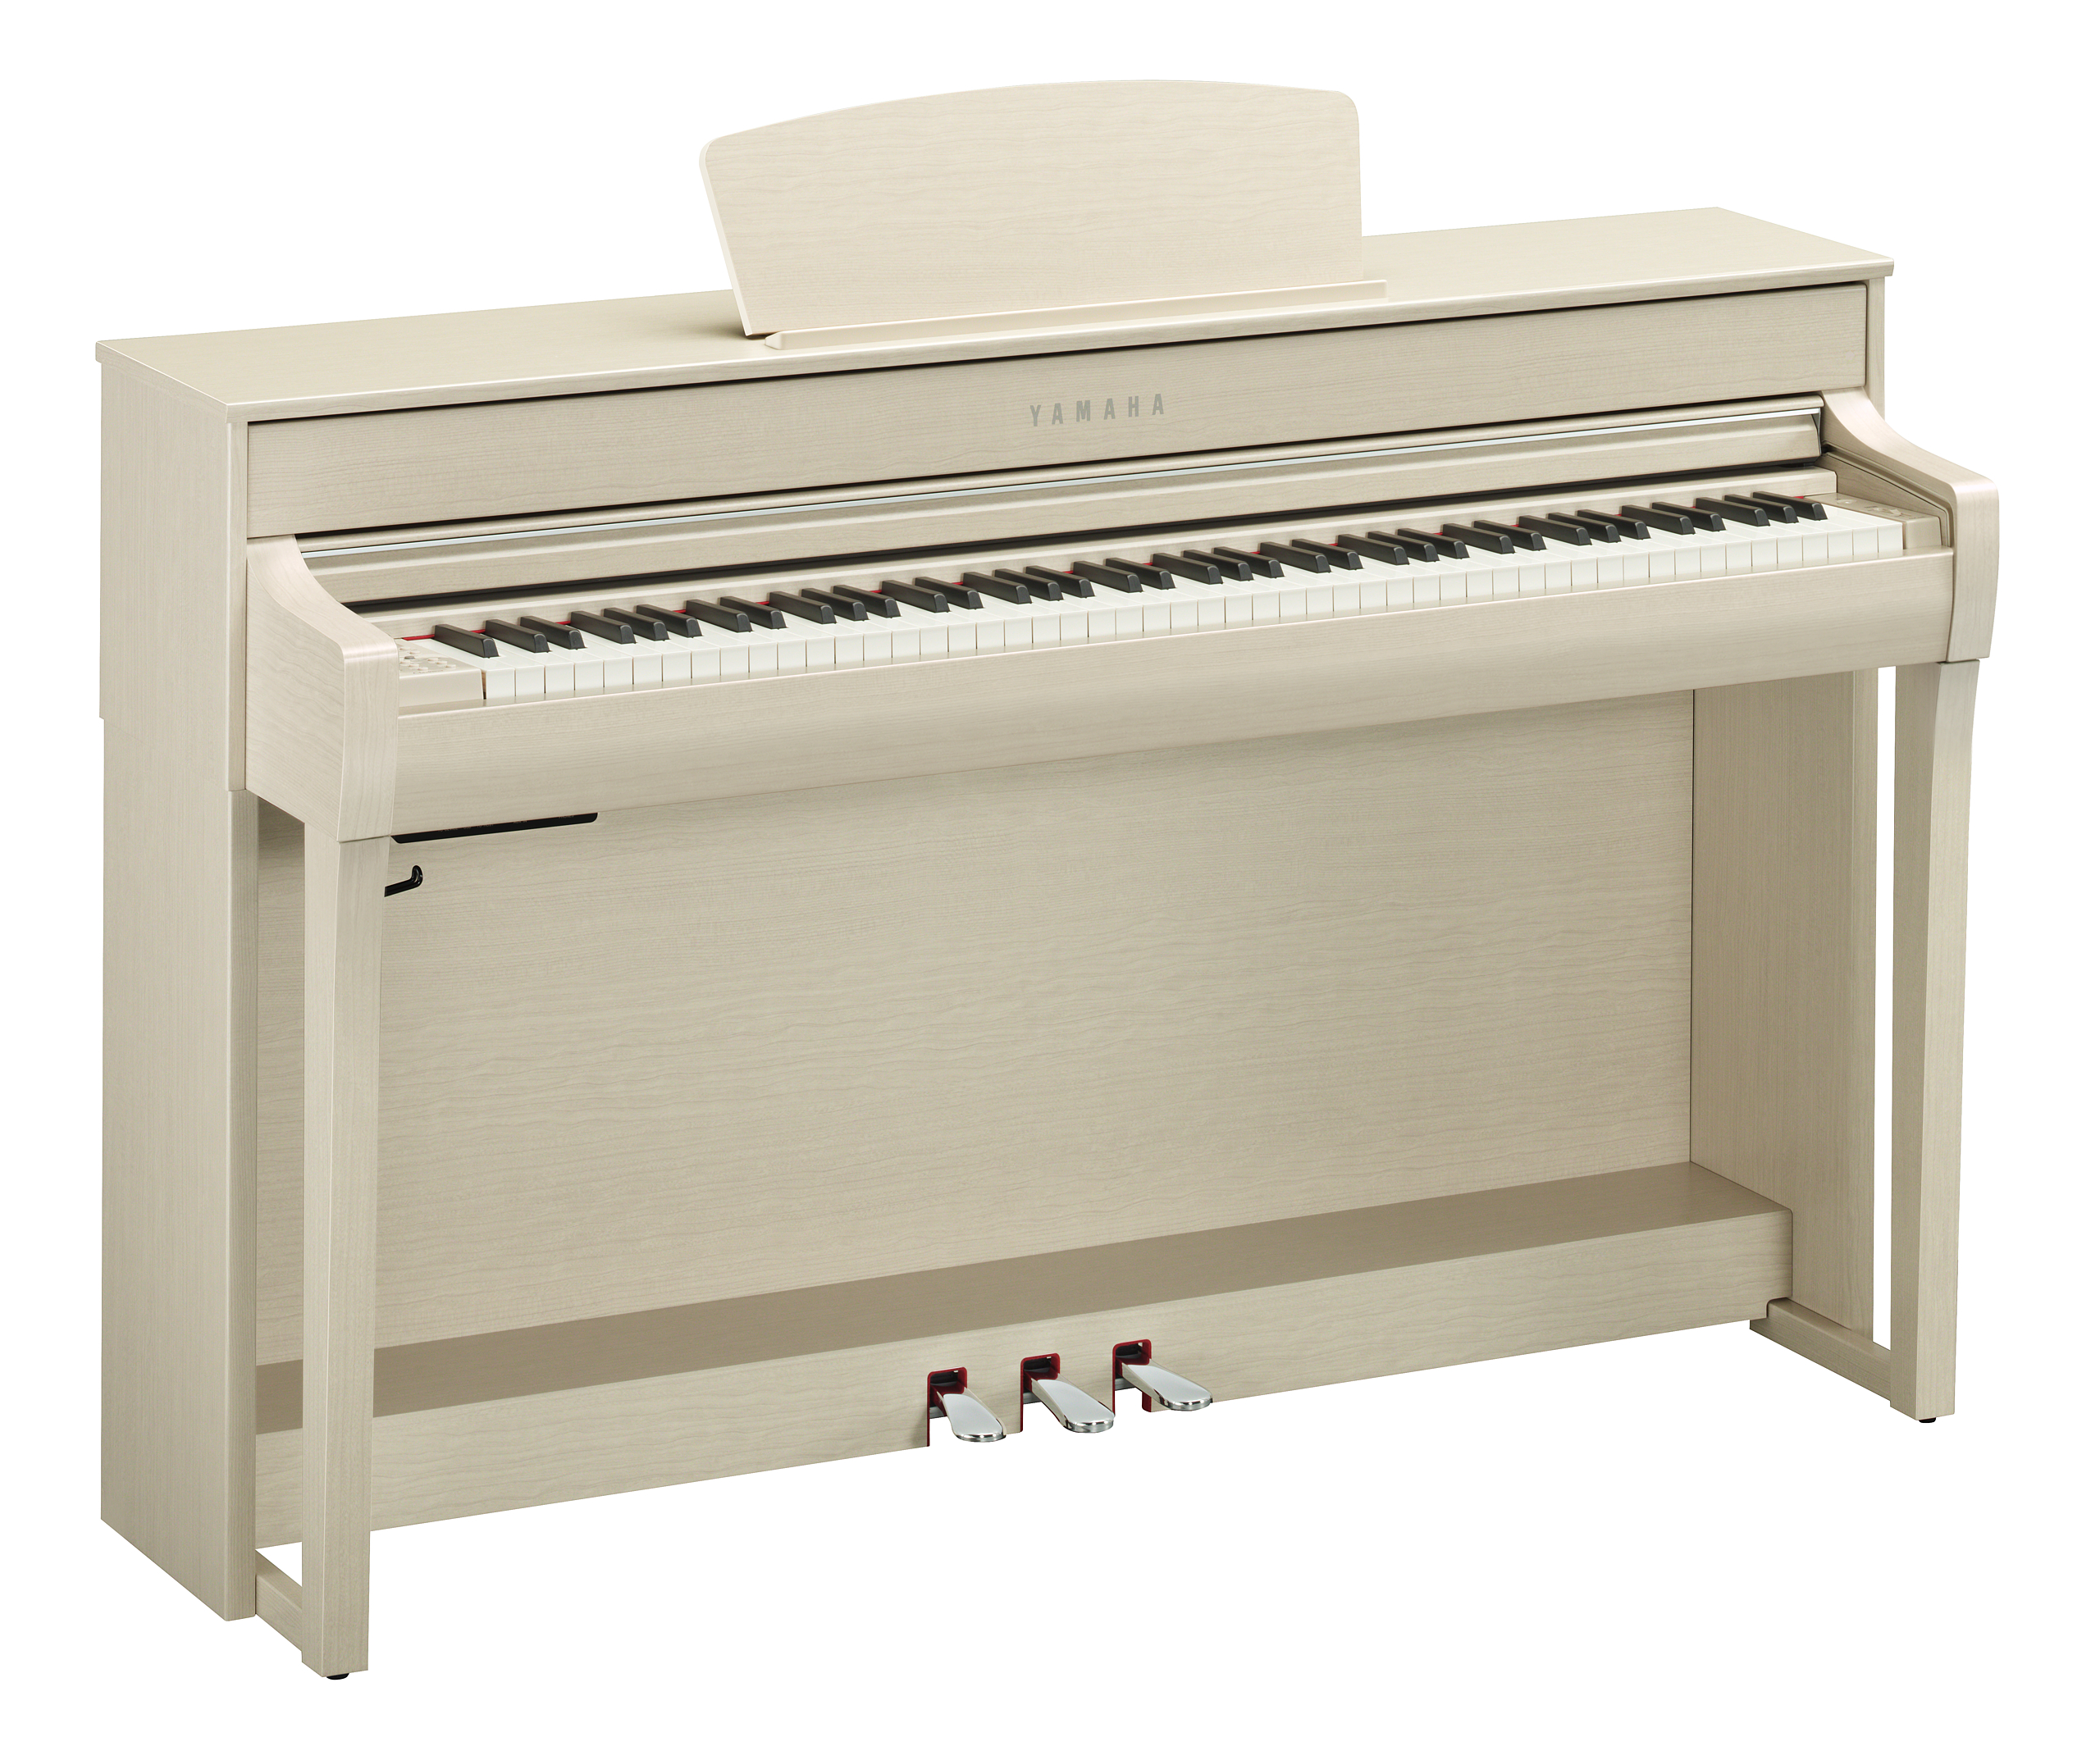 Yamaha Clp735wa - Digitale piano met meubel - Variation 1